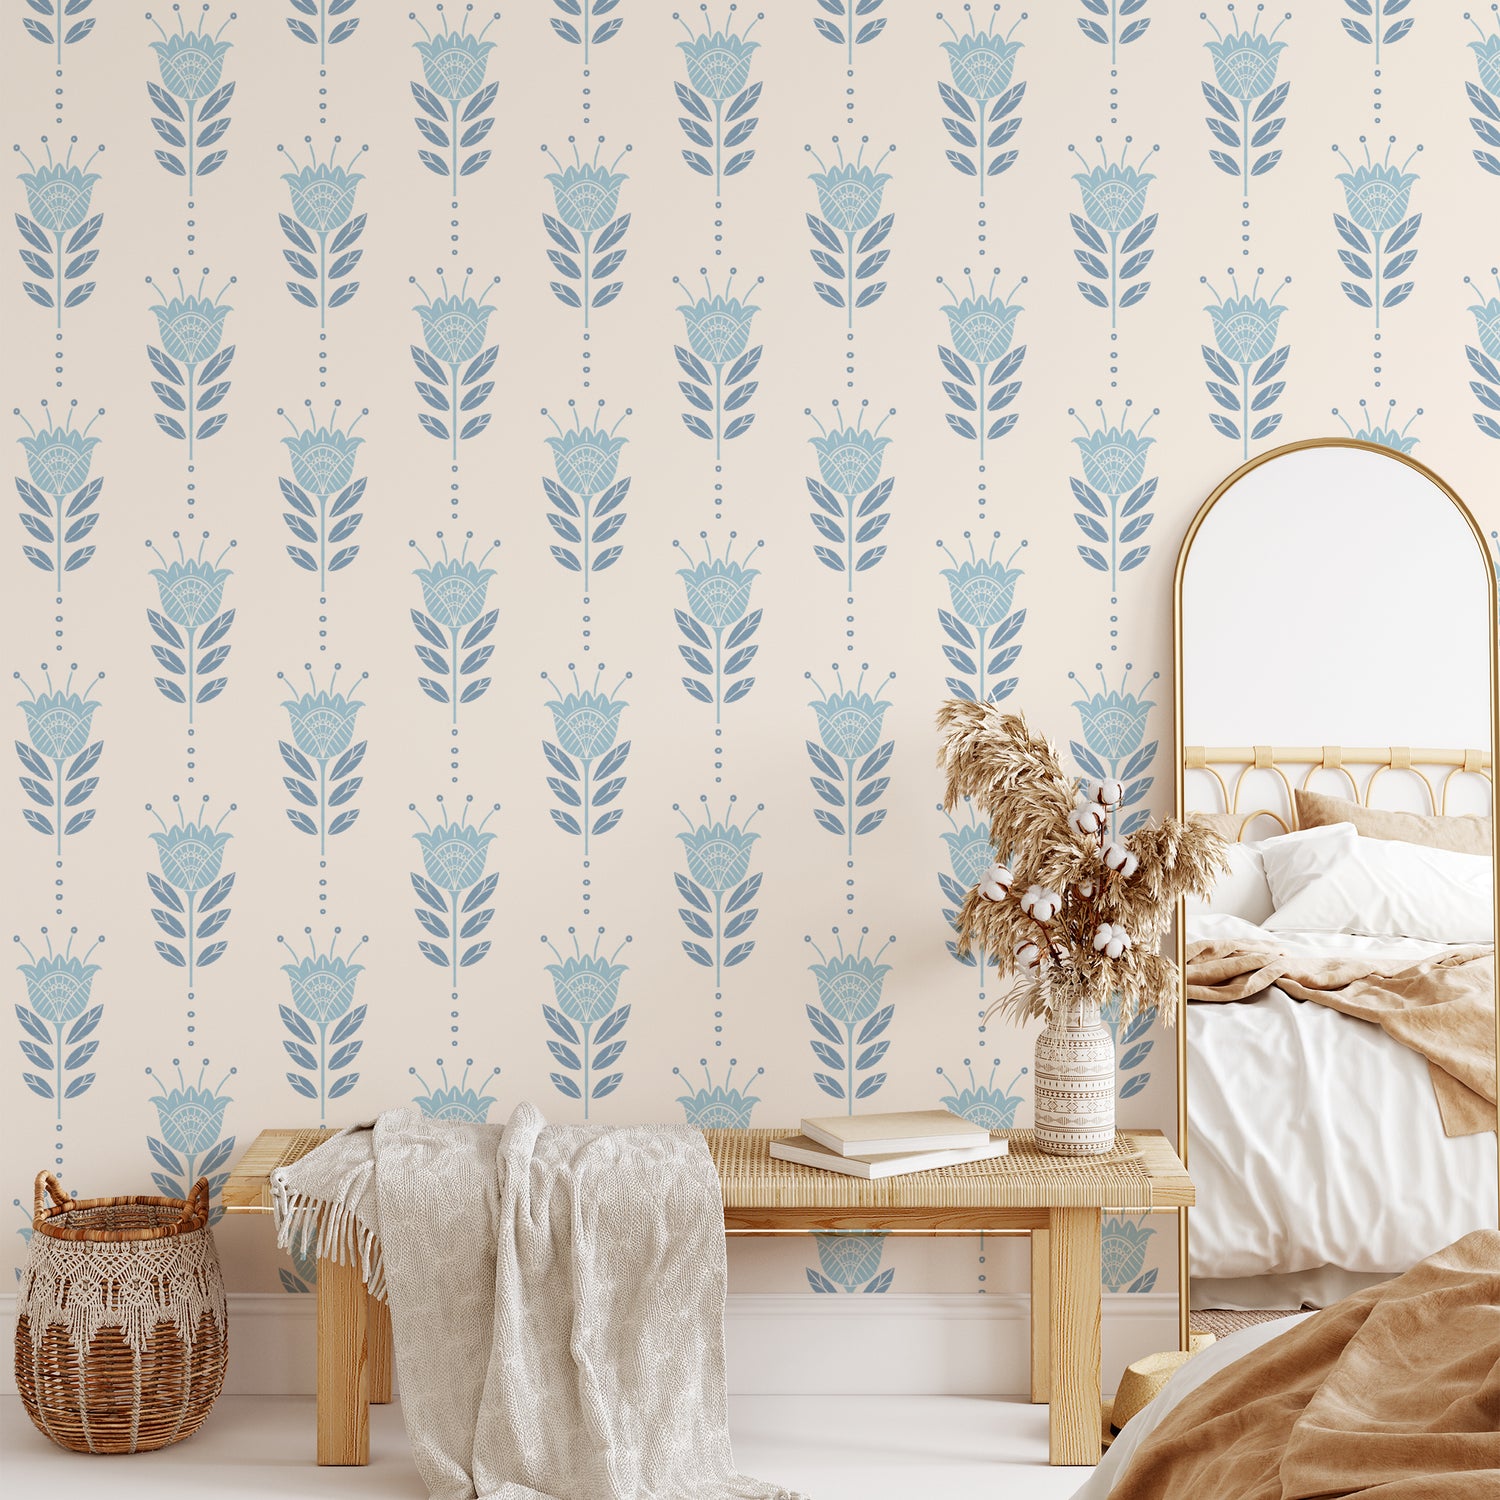 Tulips Wallpaper in Blue shown in a bedroom.